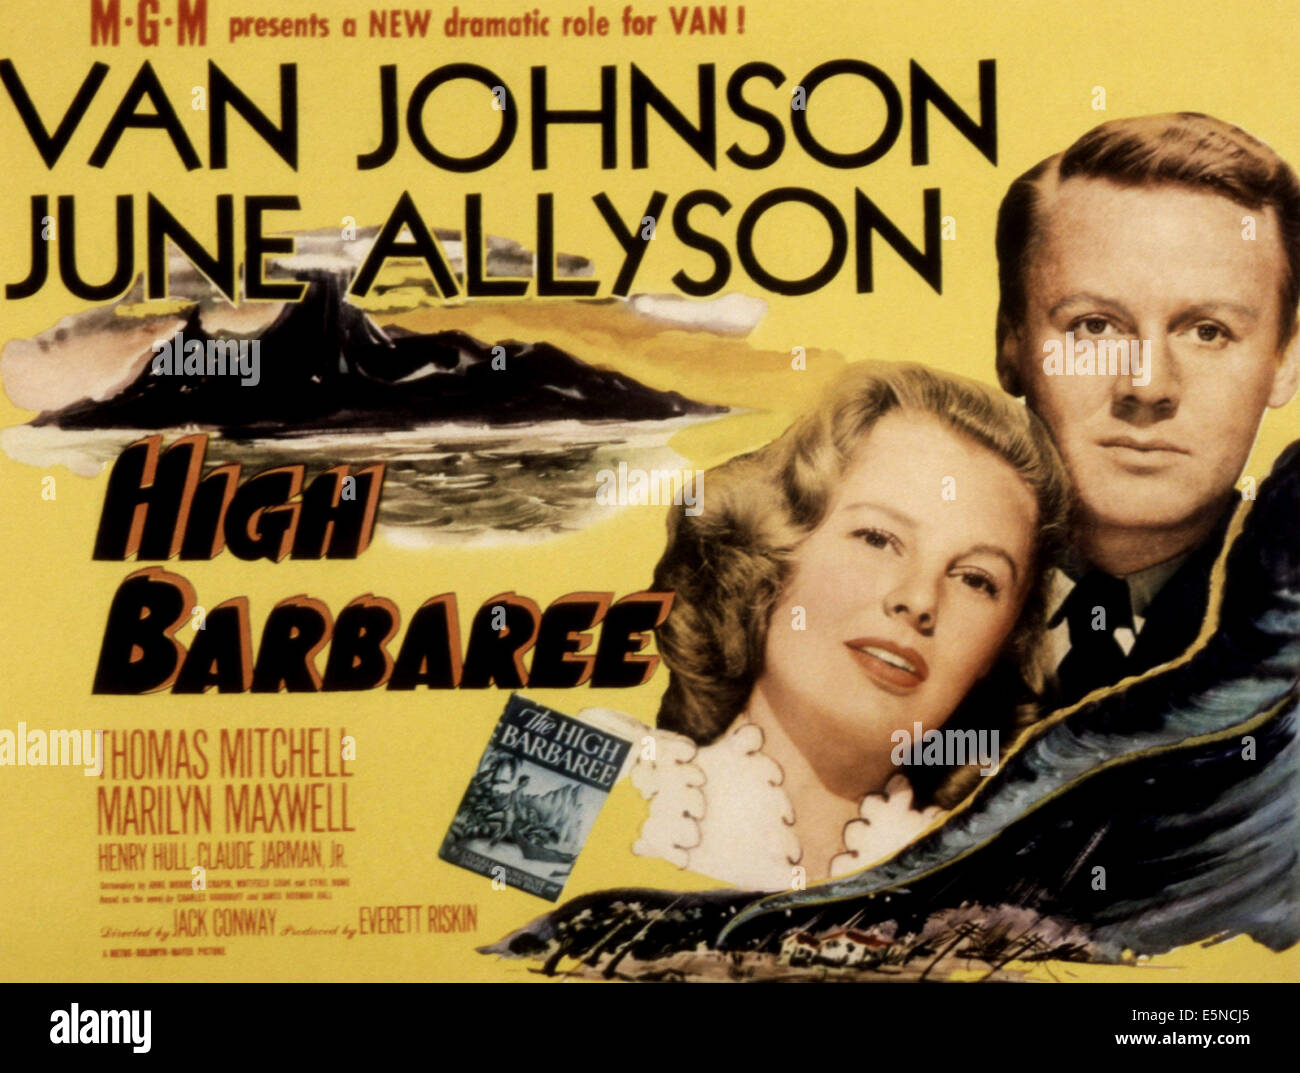 HOHE BARBAREE, June Allyson, Van Johnson, 1947 Stockfoto